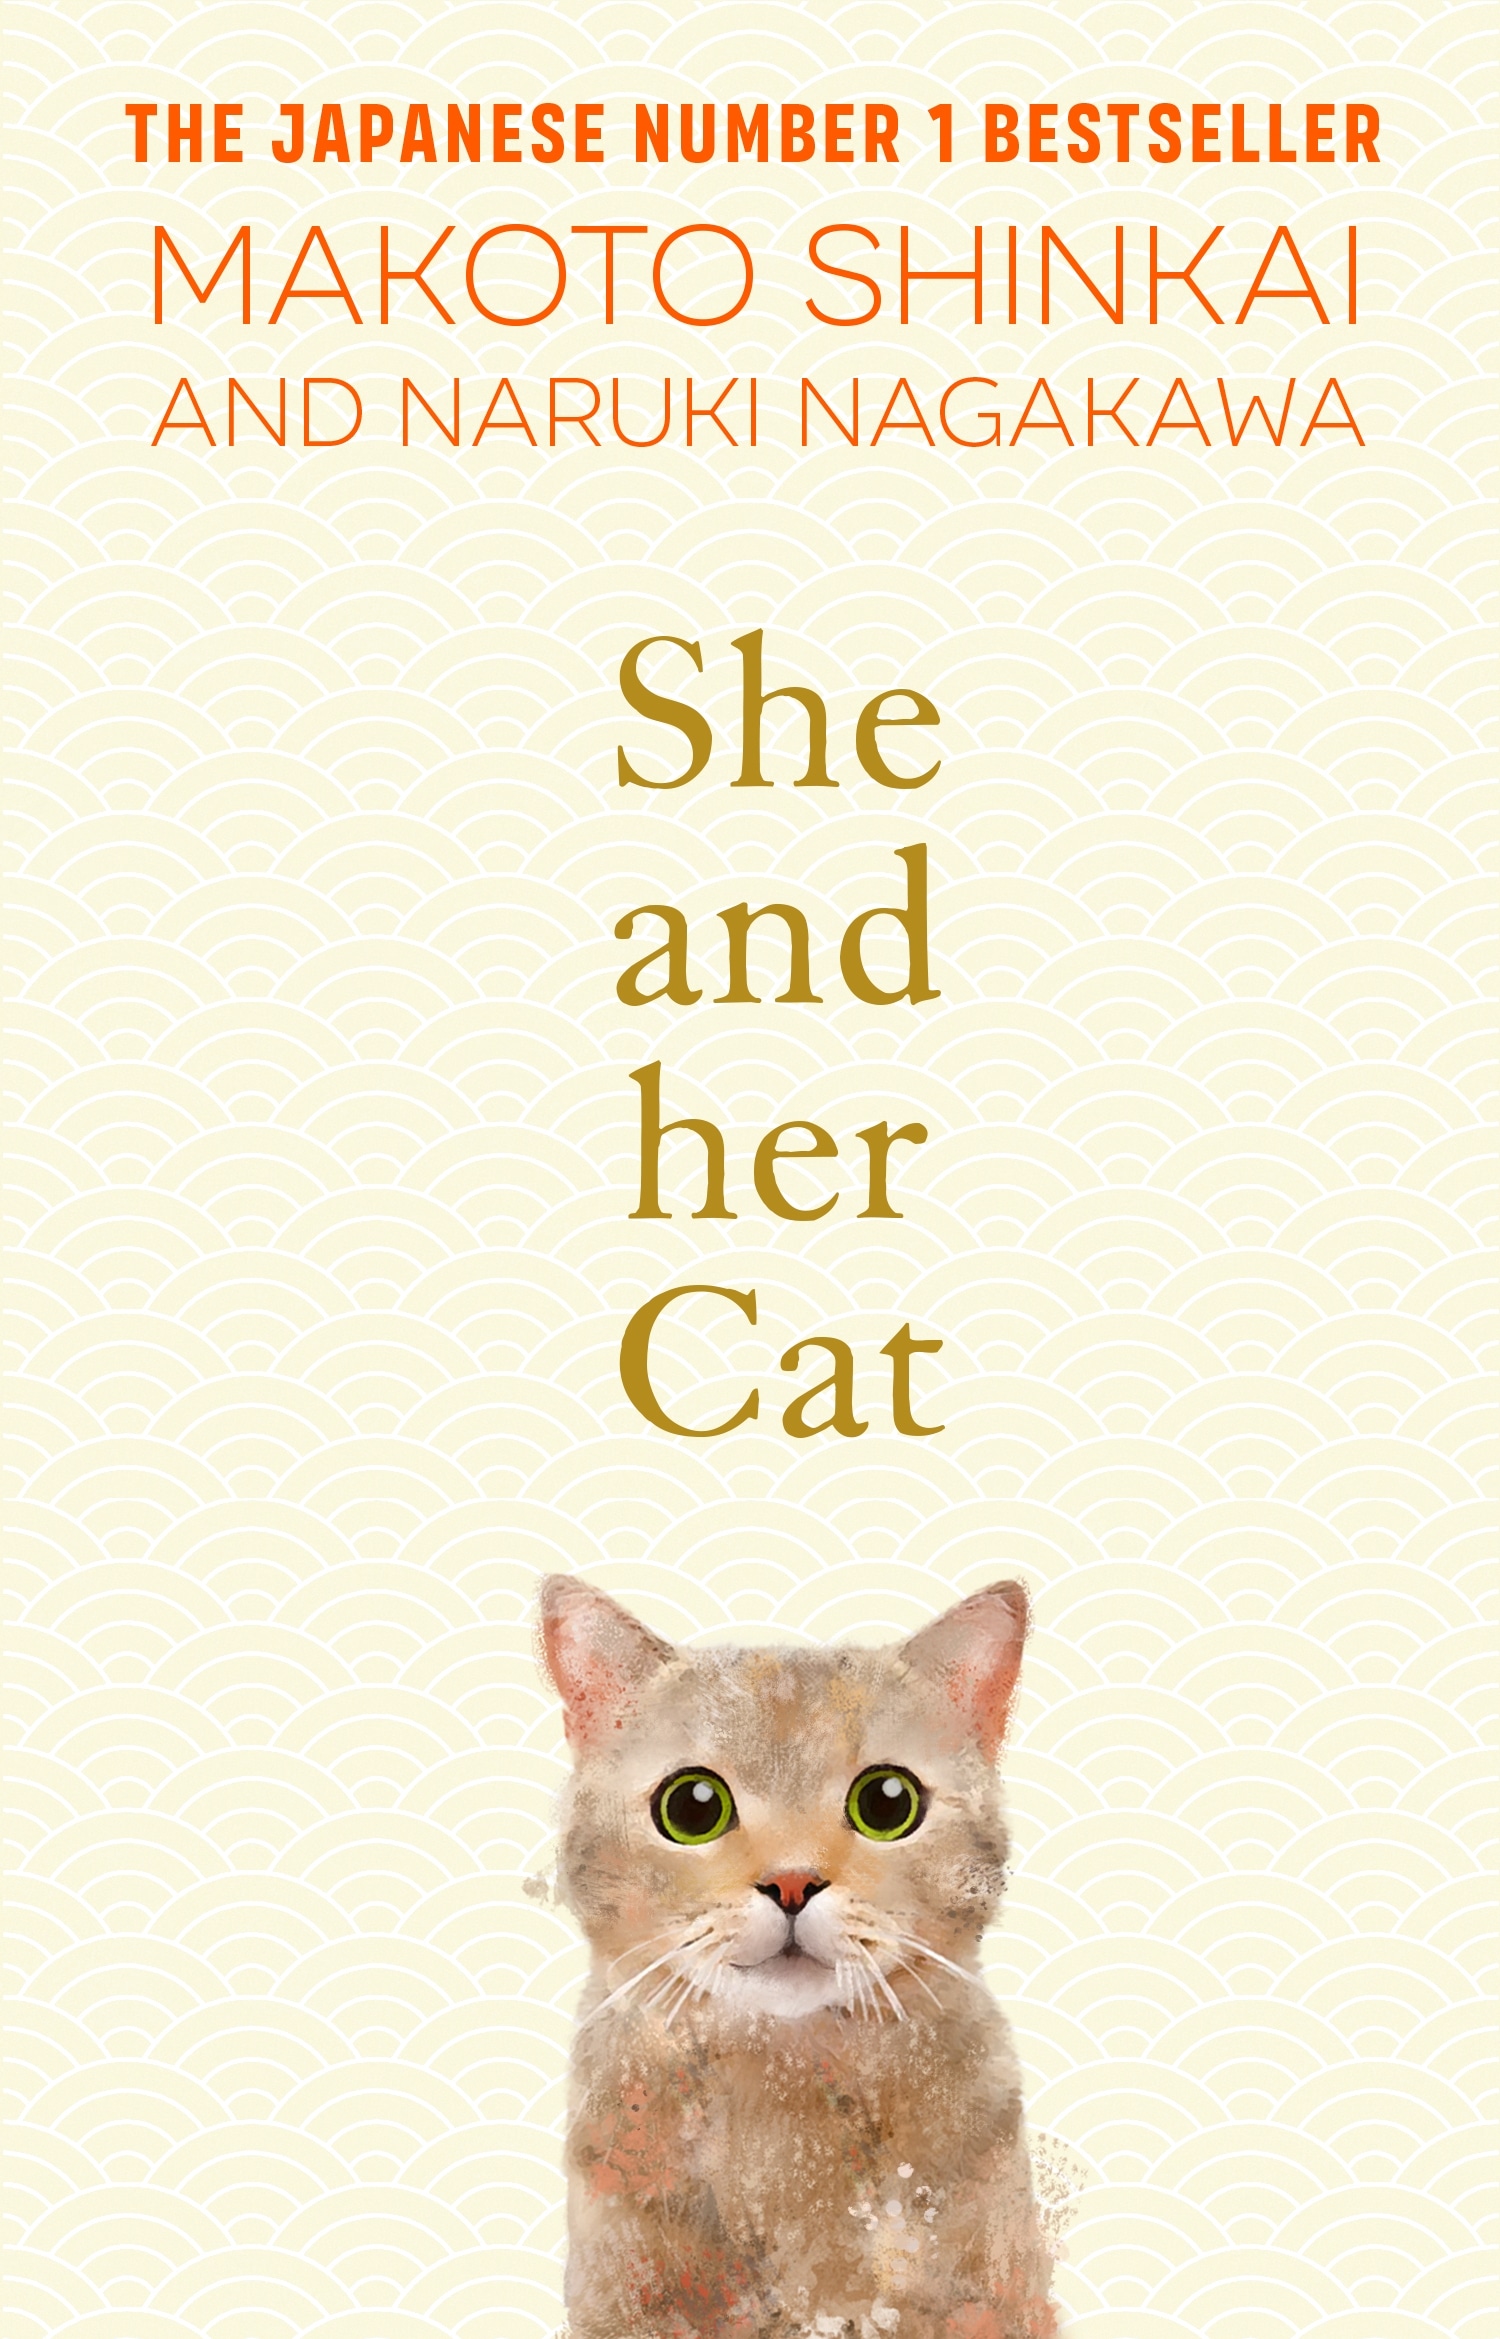 Book “She and her Cat” by Makoto Shinkai, Naruki Nagakawa — October 6, 2022